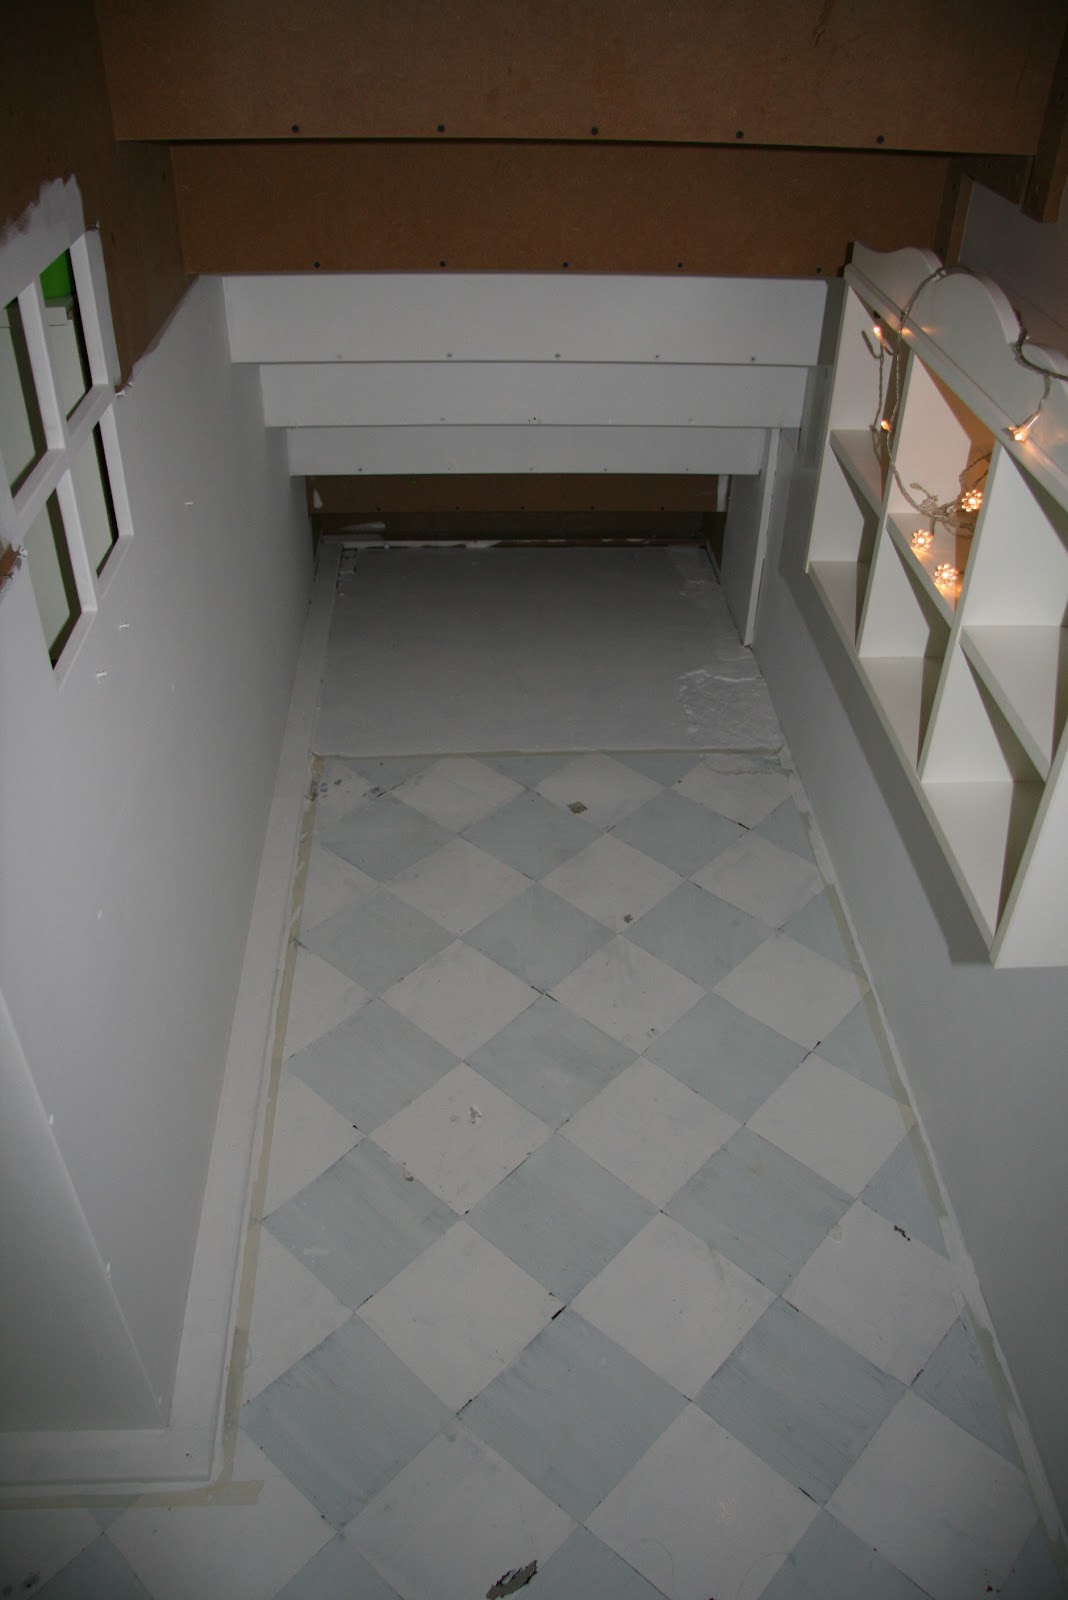 http://3.bp.blogspot.com/-m1pbAAgP6nA/UEEVUXyY2QI/AAAAAAAAAwY/uOIJltqyk-M/s1600/Stairs+house+-+painting+floor+an+wall+white+and+blue+3.jpg